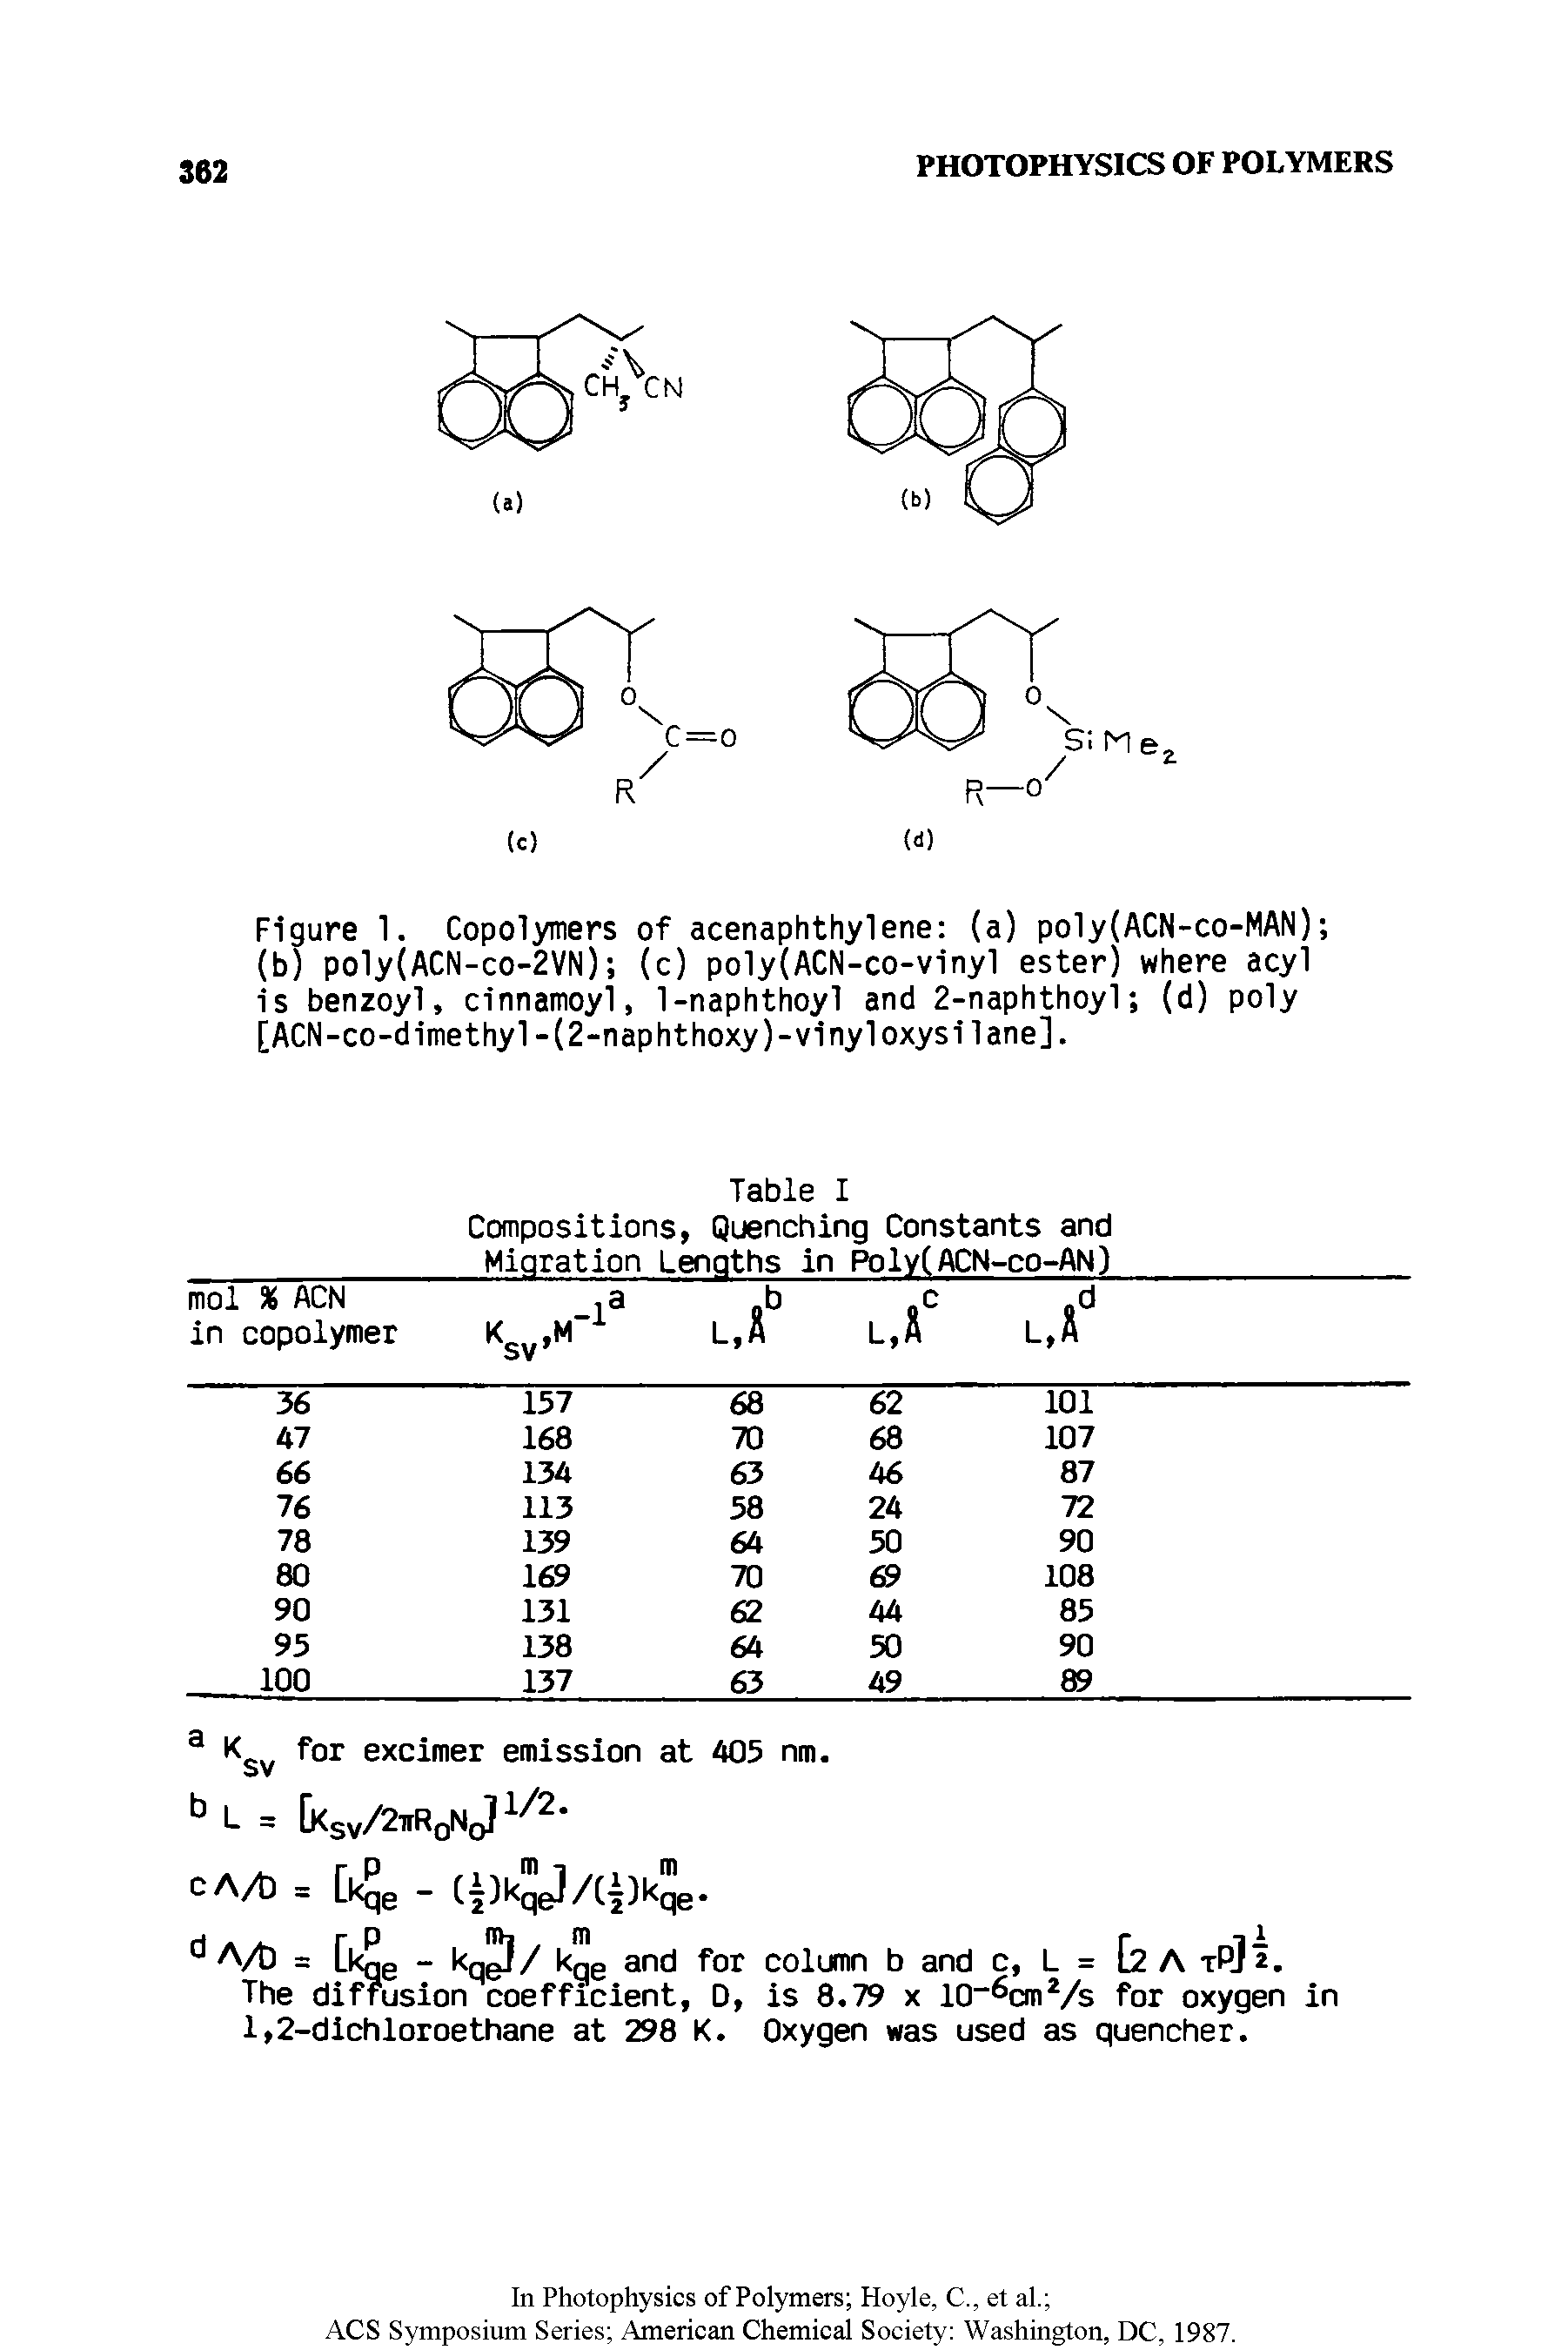 Figure 1. Copolymers of acenaphthylene (a) poly(ACN-co-MAN) (b) poly(ACN-co-2VN) (c) poly(ACN-co-vinyl ester) where acyl is benzoyl, cinnamoyl, 1-naphthoyl and 2-naphthoyl (d) poly [ACN-co-dimethyl-(2-naphthoxy)-vinyloxysilane].